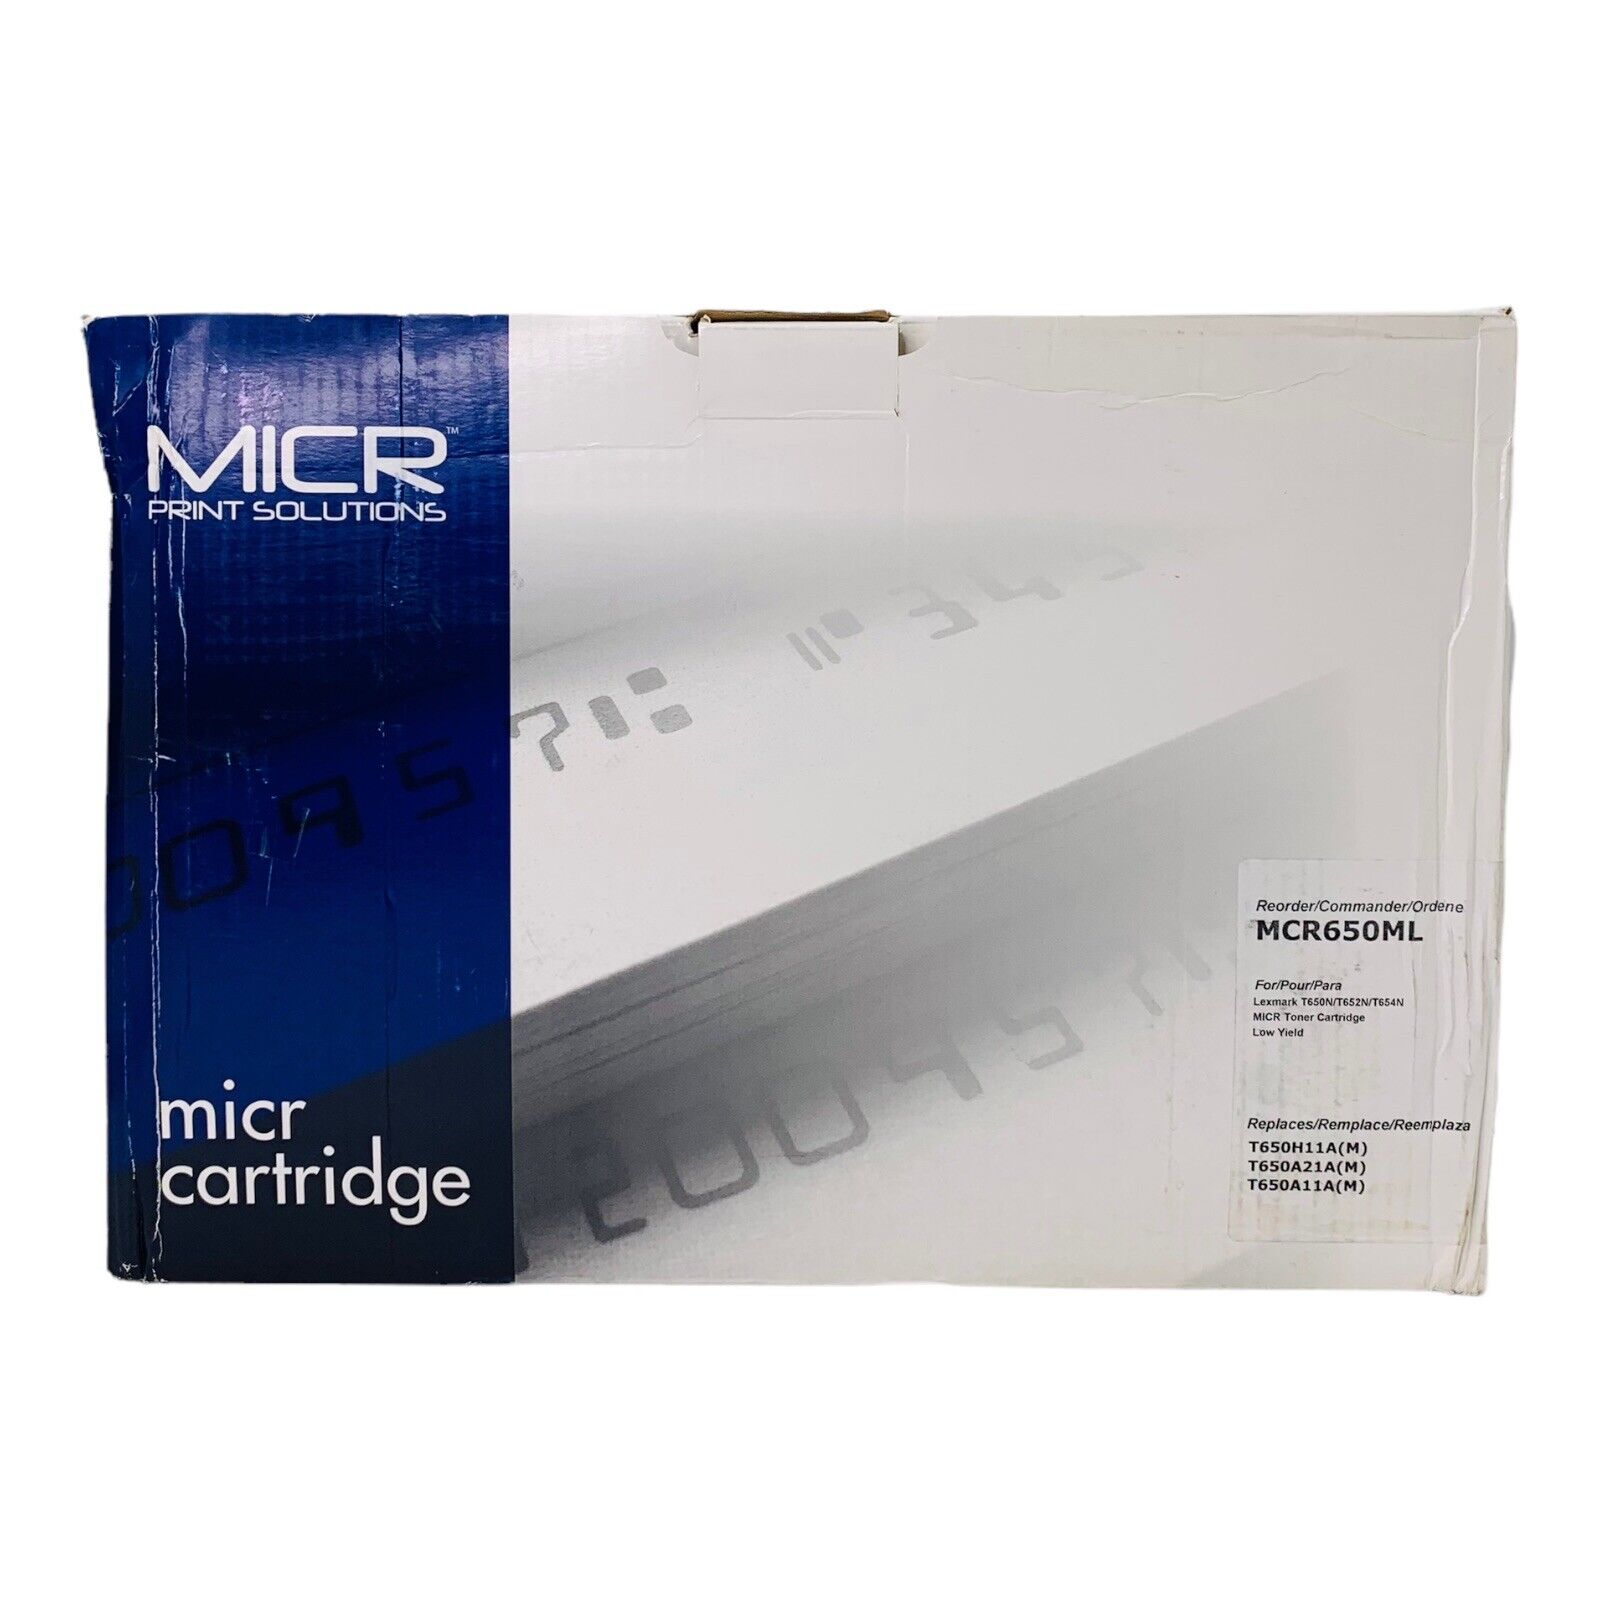 MICR Print Solutions Compatible Lexmark MCR650ML Black MICR Cartridge, Low Yield